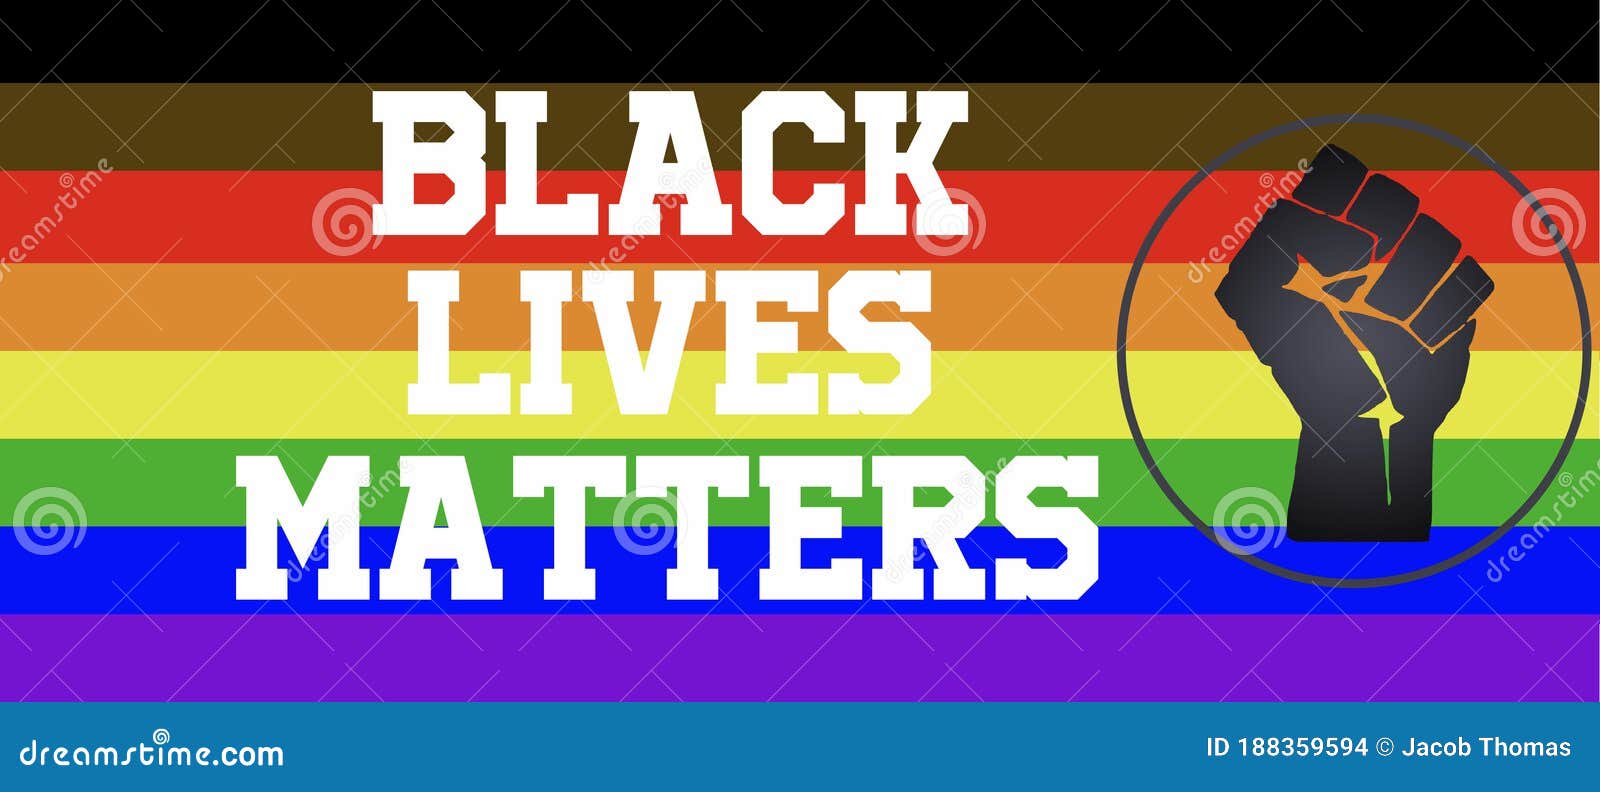 Shade of Brown Skin Flag Melanin Rainbow Flag Black Lives Matter Flag Black Is Beautiful Gift Black History Month Banner